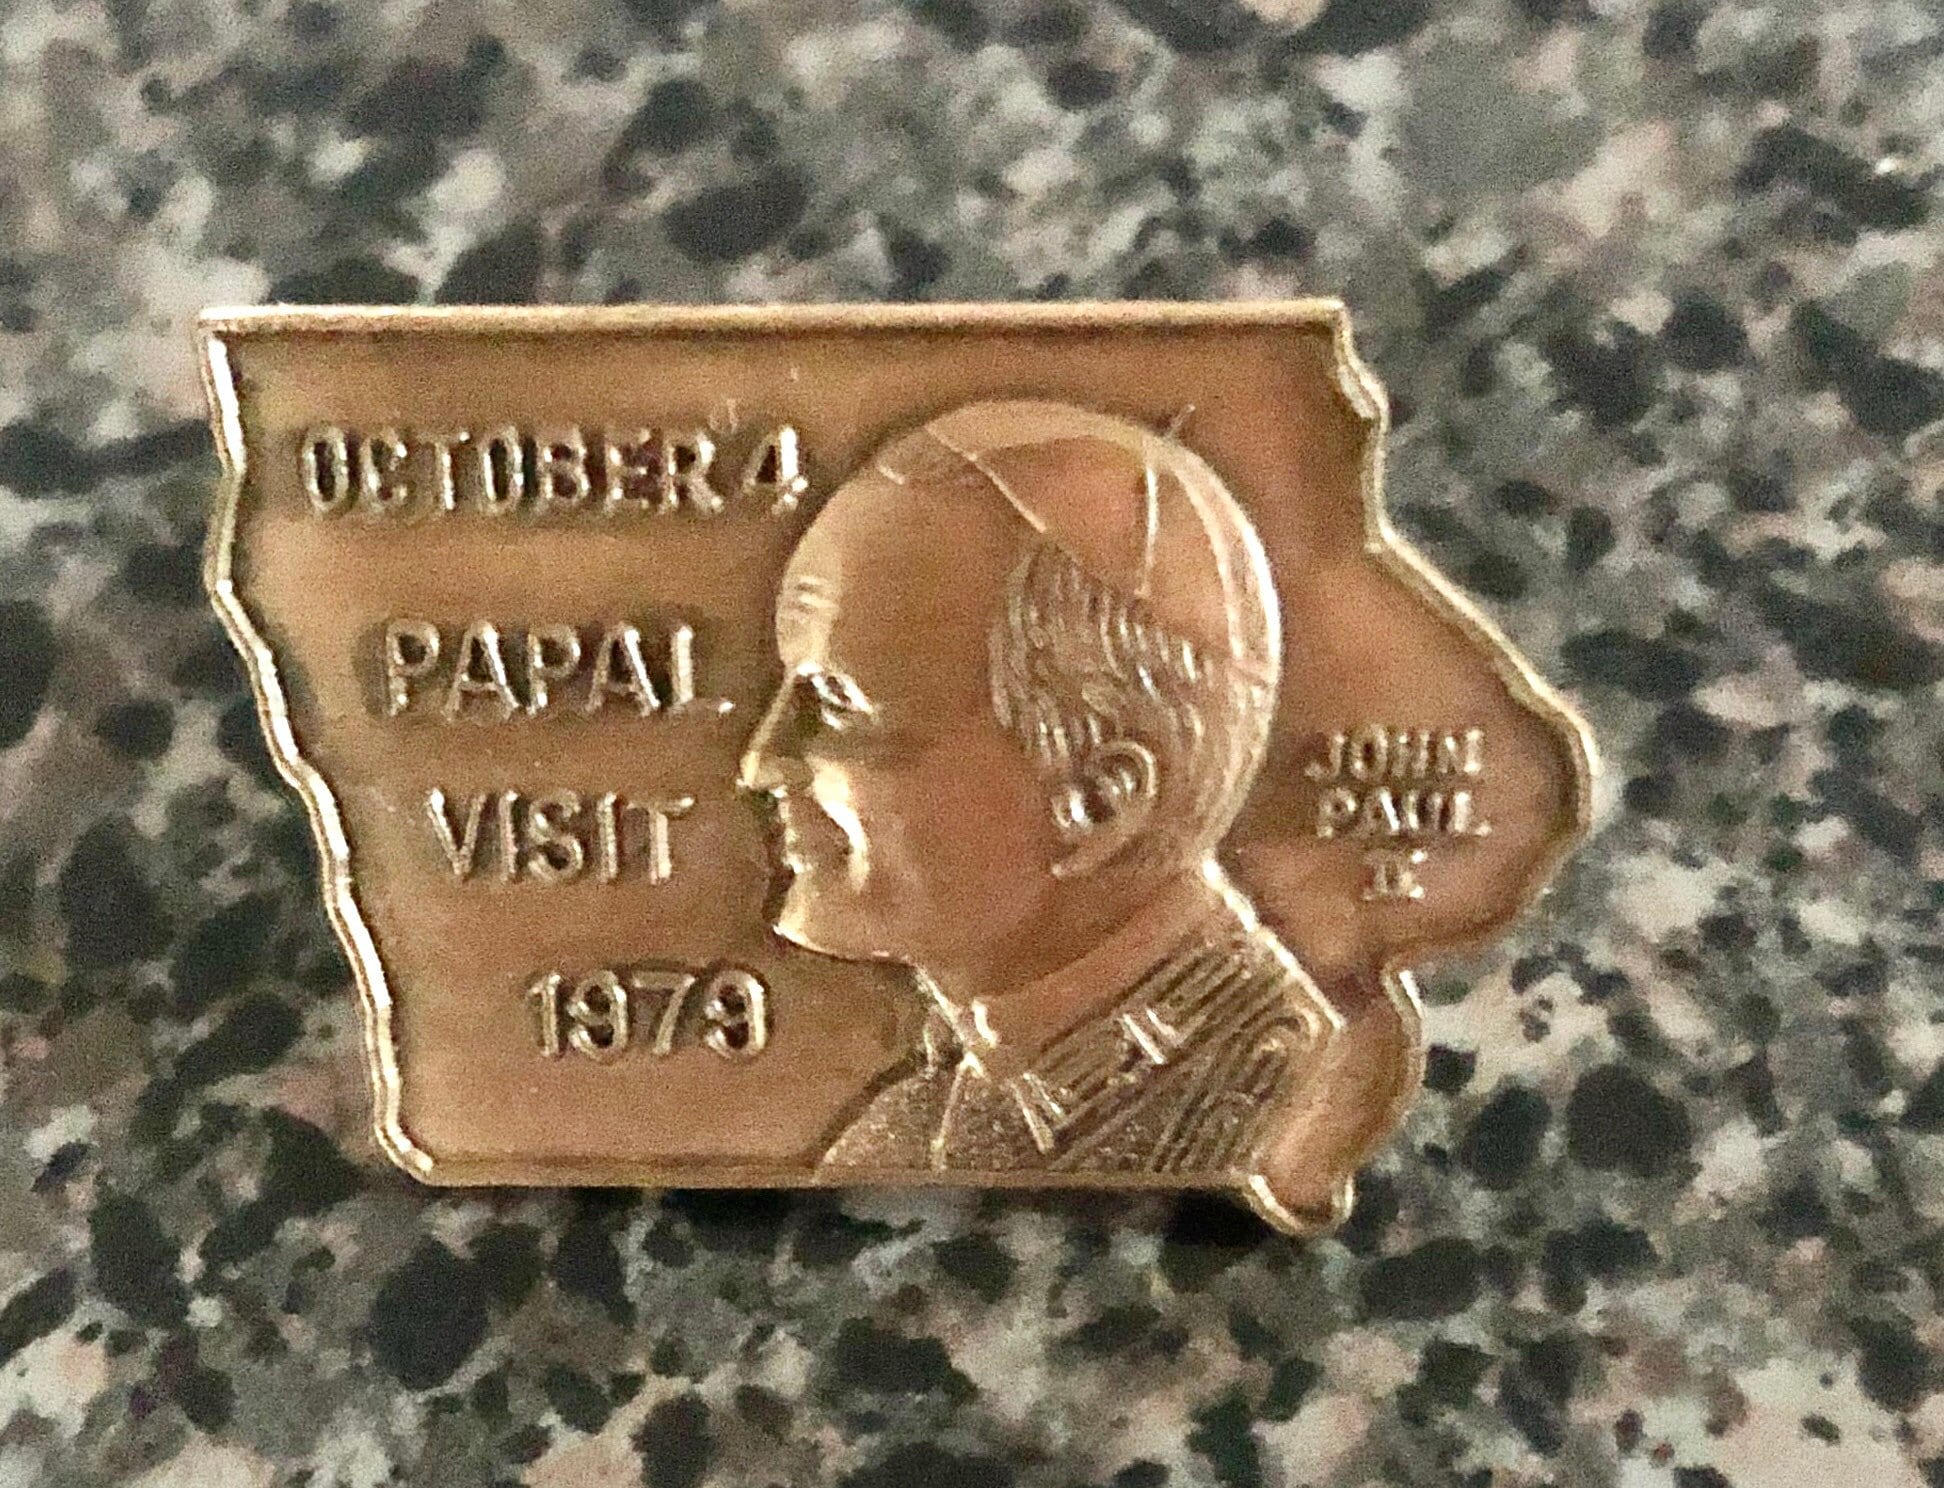 Details about   Vintage PAPAL VISIT Iowa Commemorative Pin 1979 John Paul II October 4 